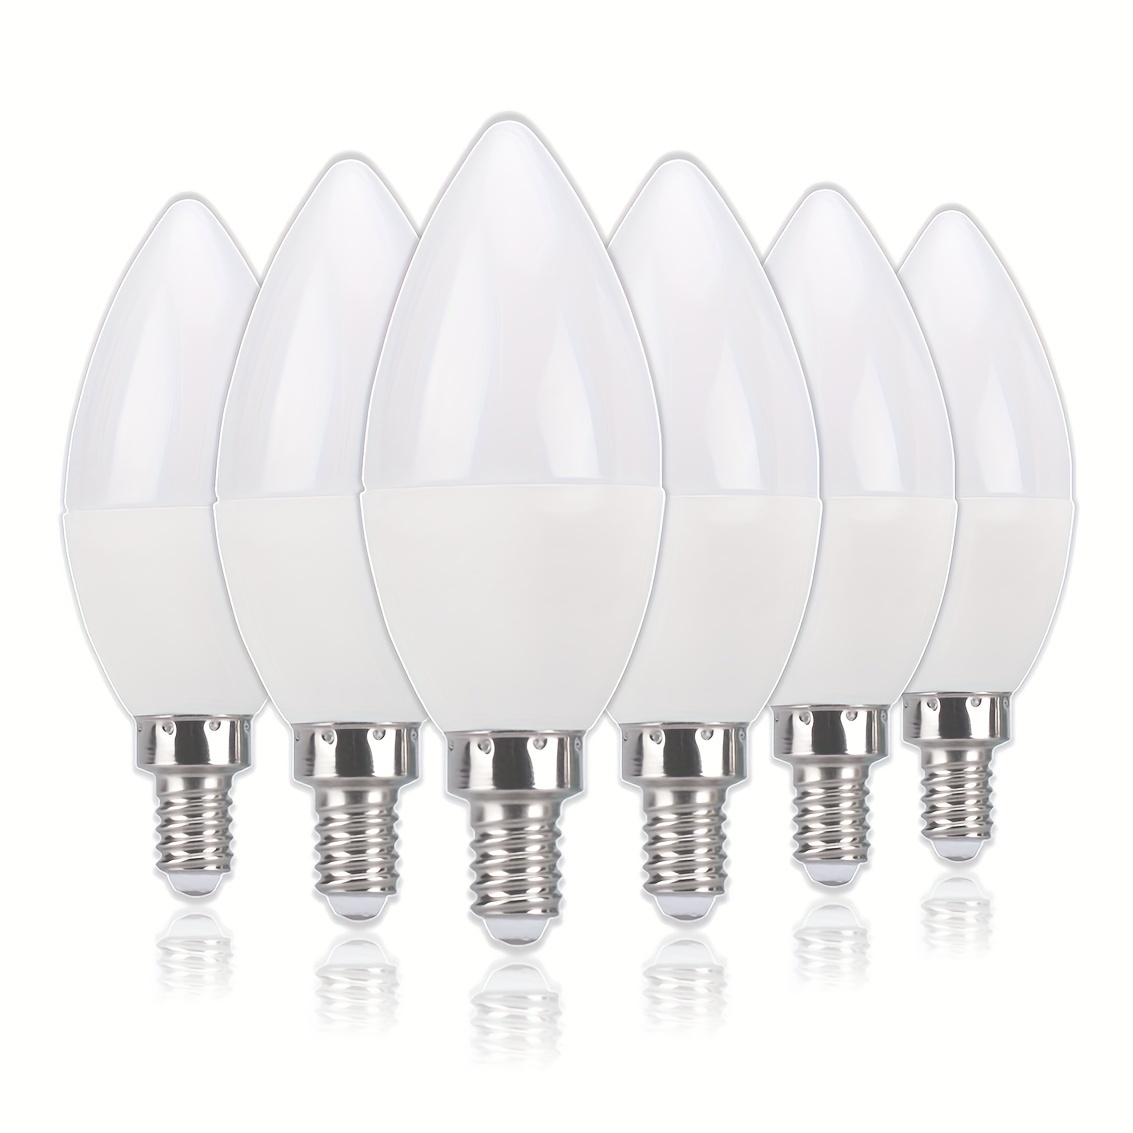 Pack of 5) LED Candle Light bulb SES/E14 4W 400LM 4000K